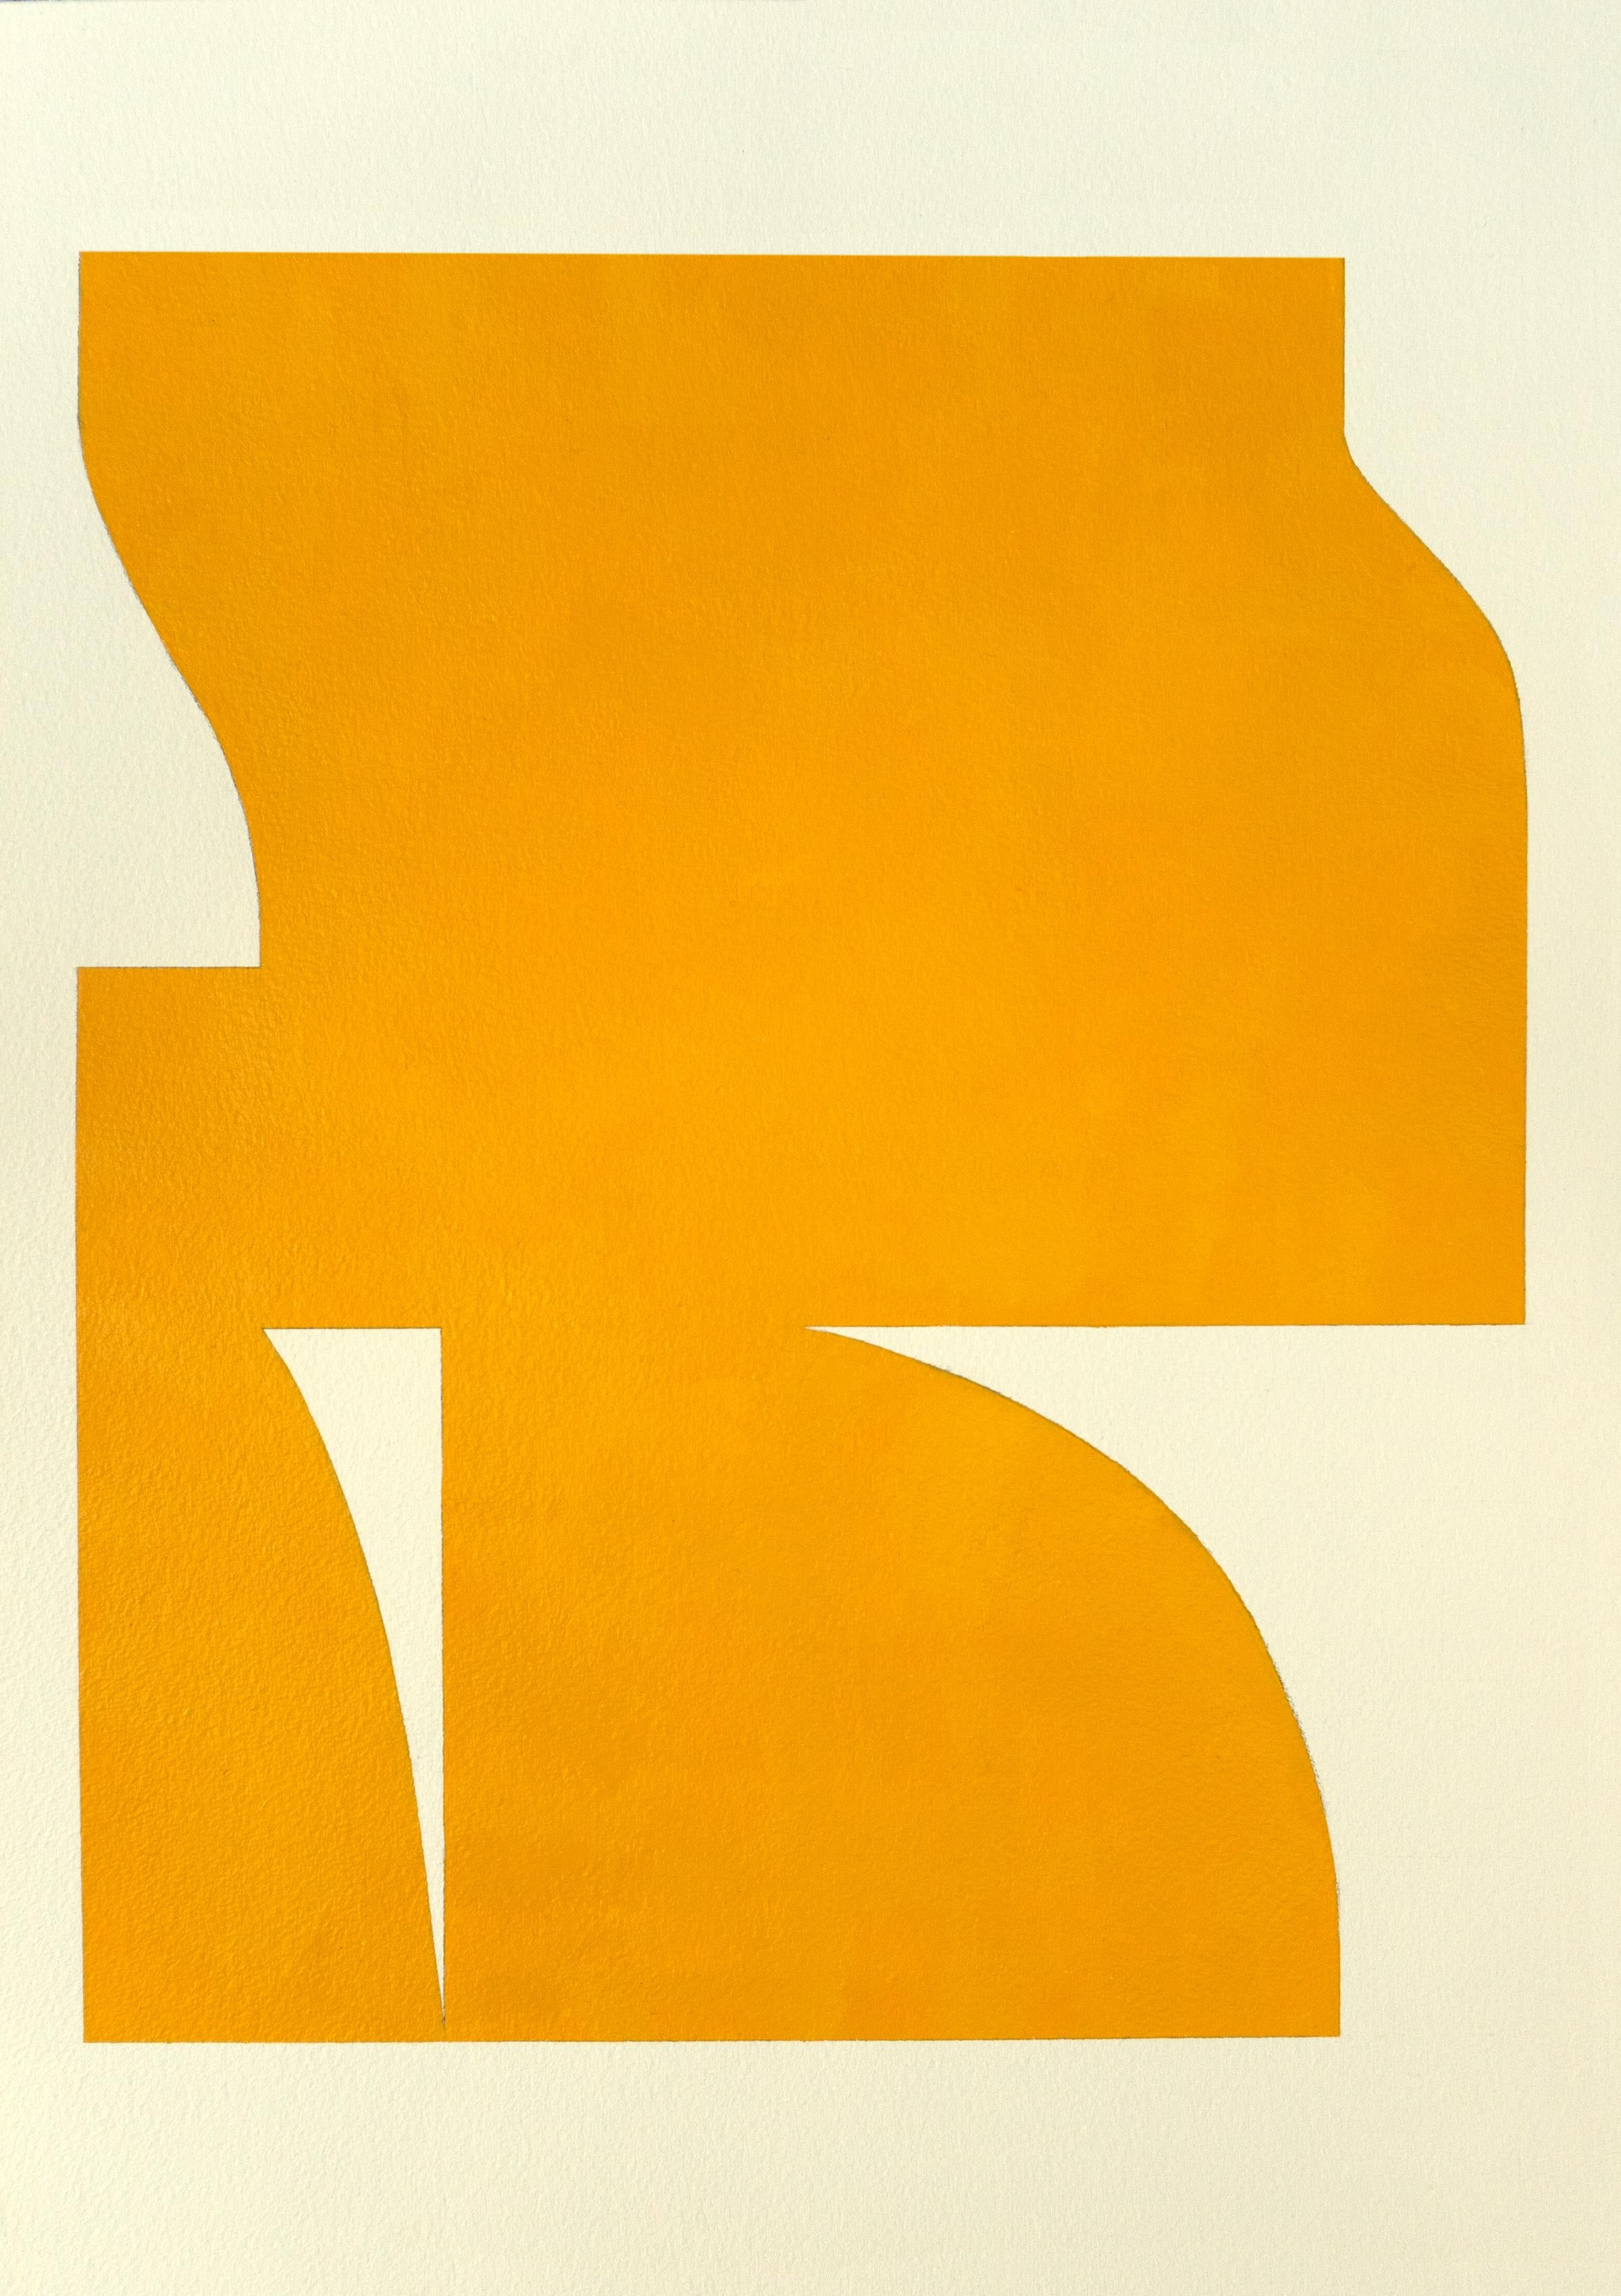 Shape 16 (2019) - Abstract shape, work on paper, minimalist, orange yellow